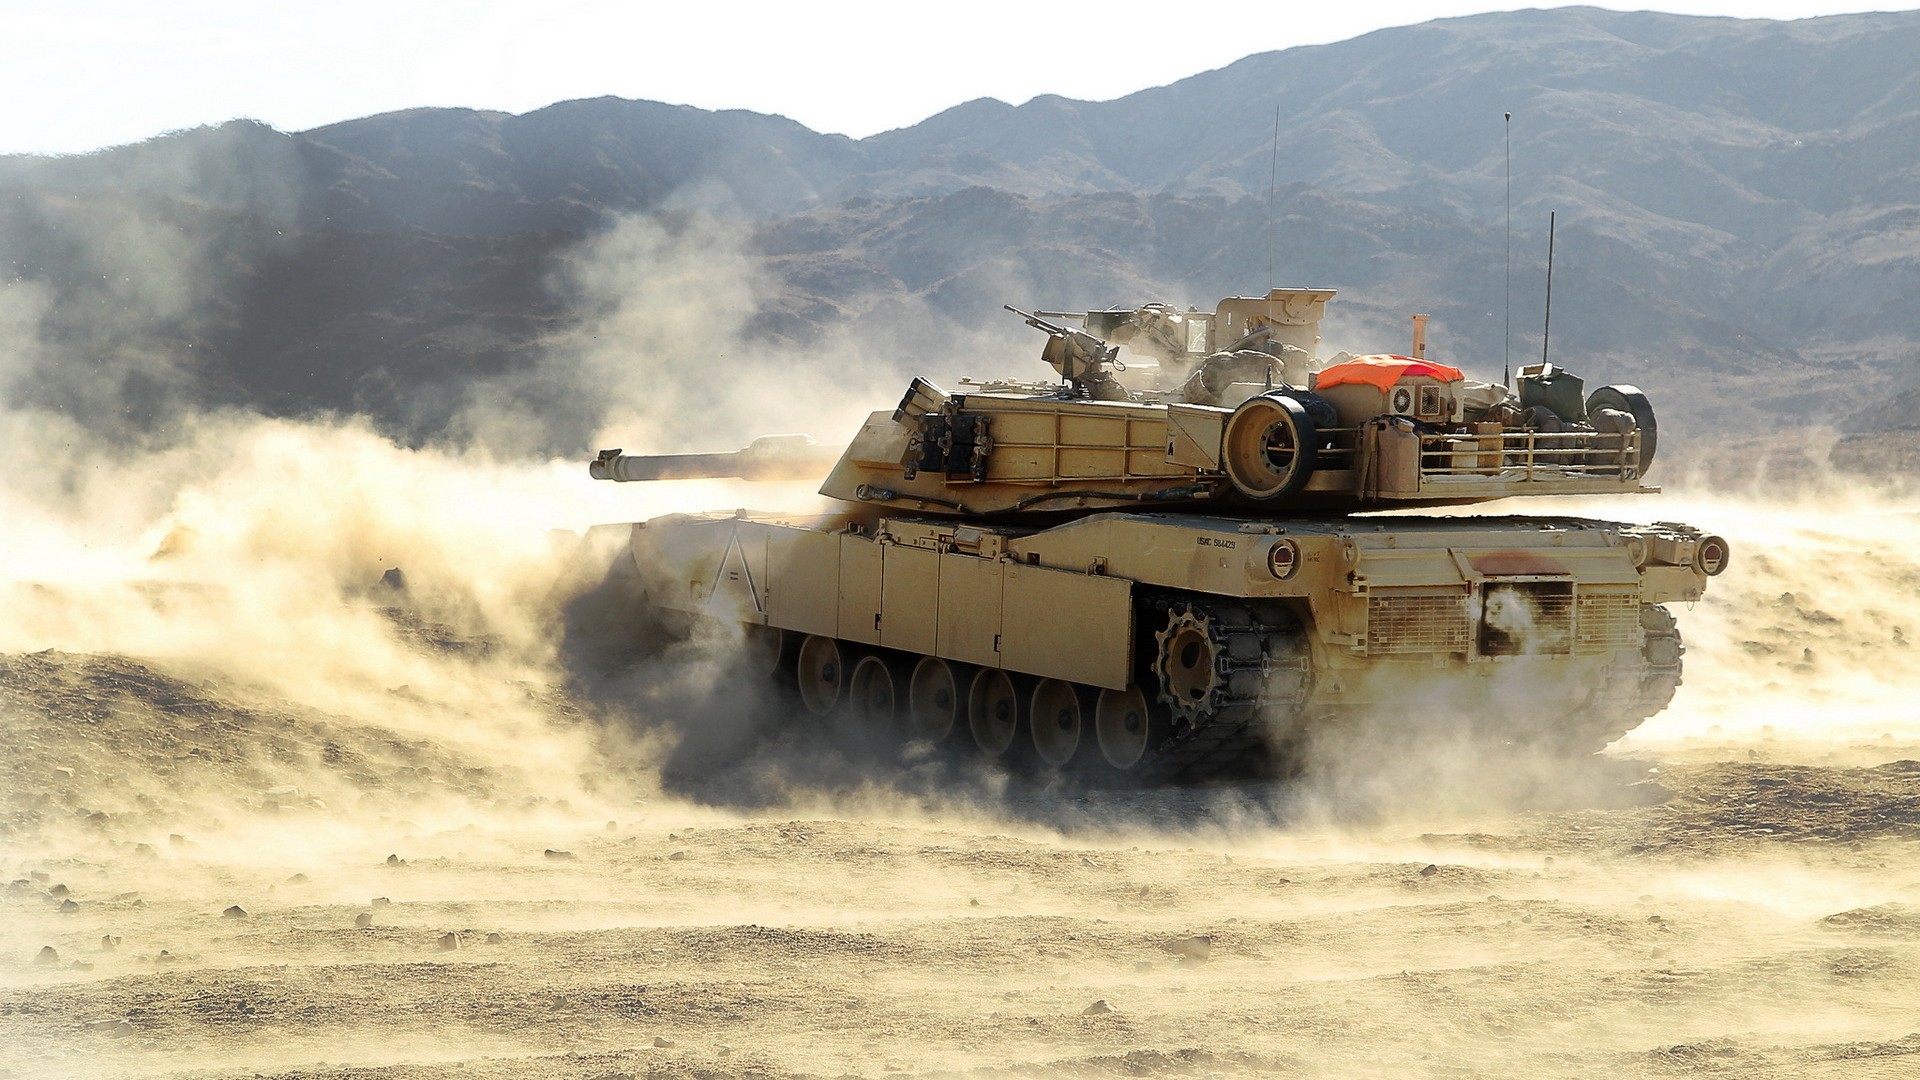 General 1920x1080 M1 Abrams tank military desert vehicle military vehicle